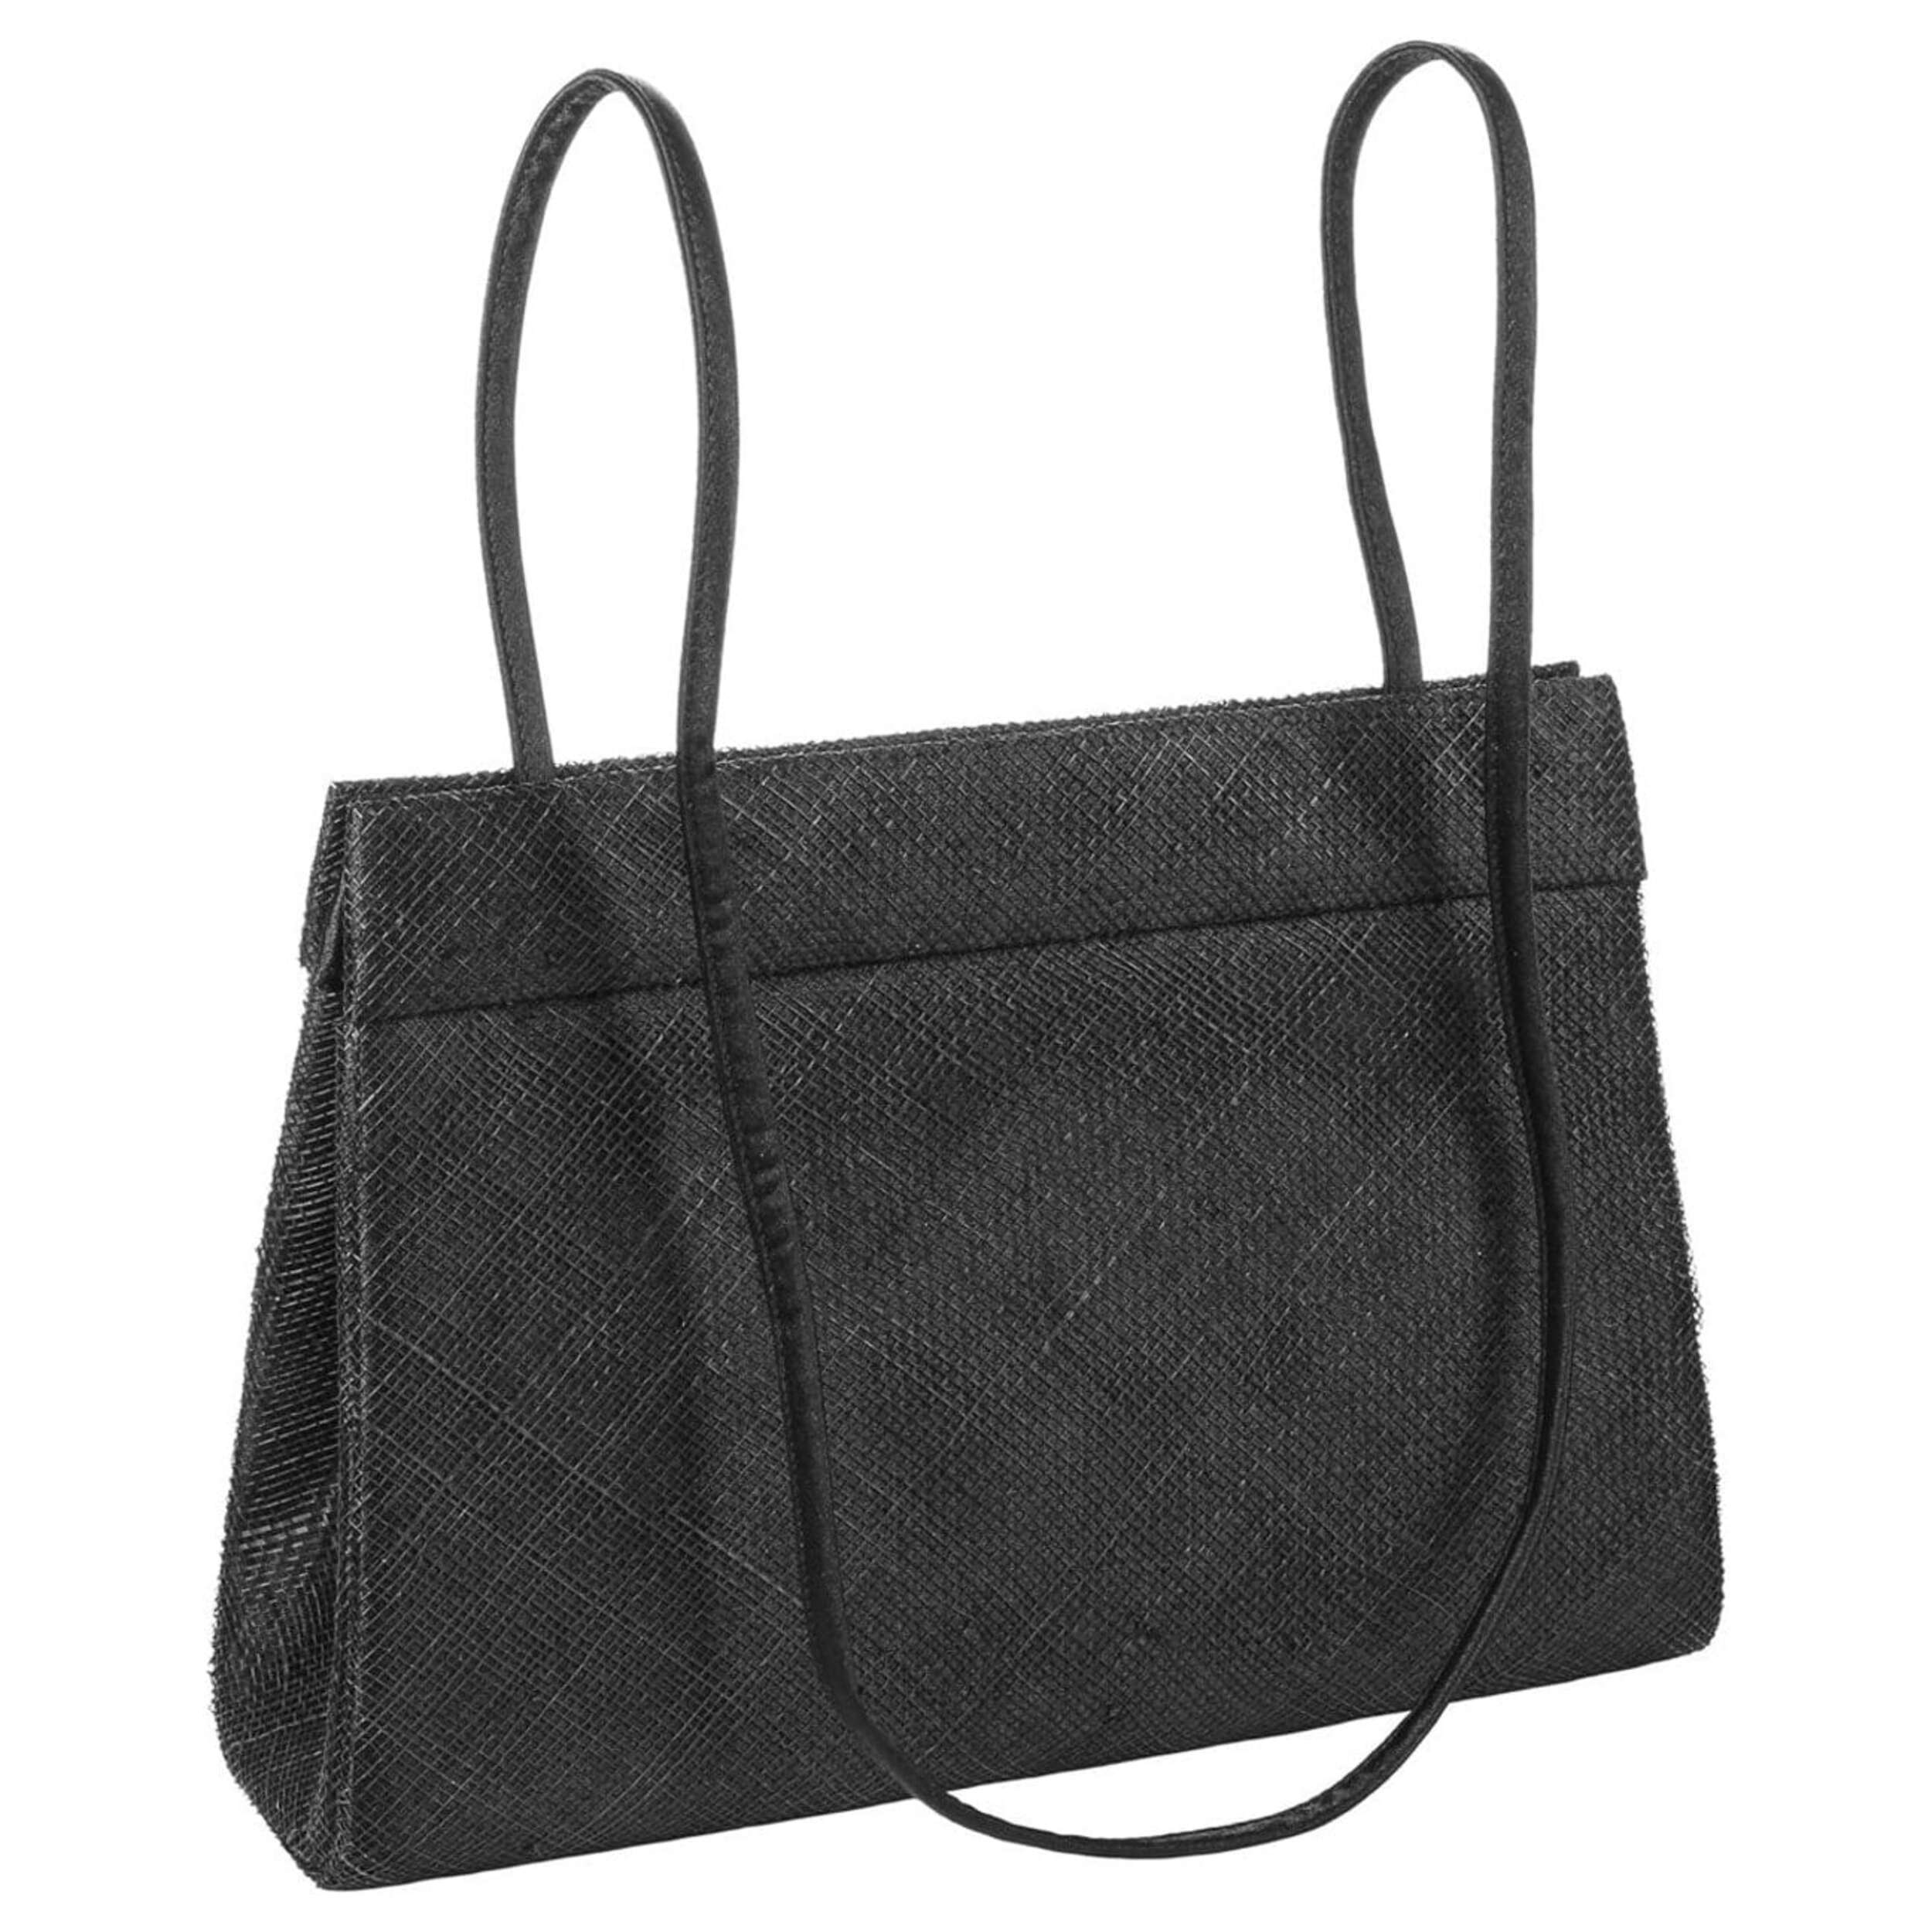 Sinamay Handbag by Lierys - 35,95